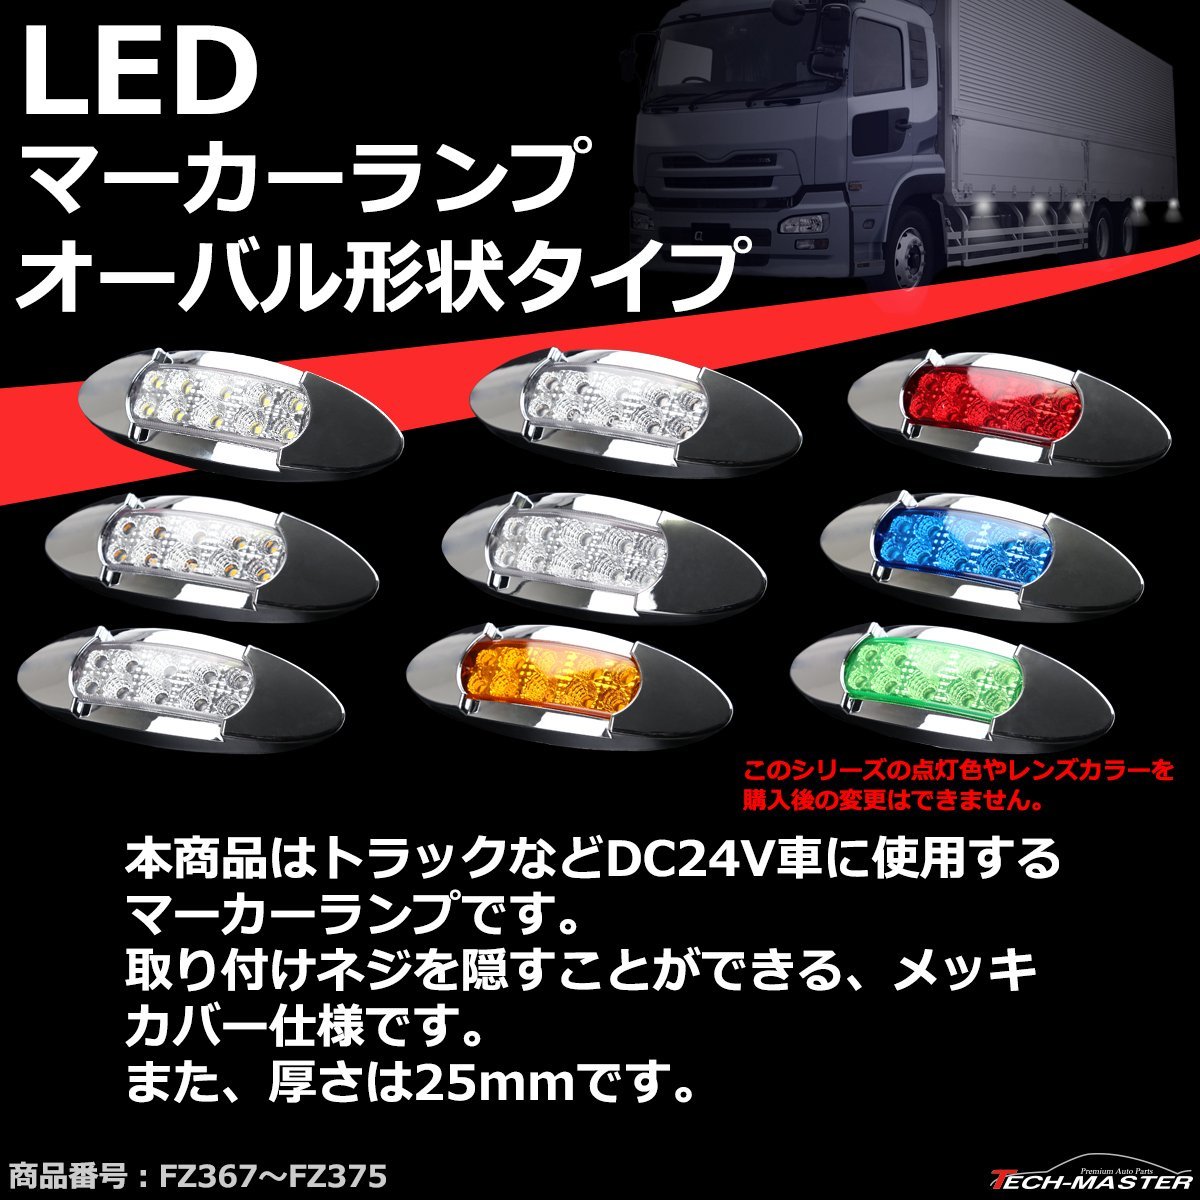 LEDマーカーランプ オーバル形状 DC12V/24V兼用 汎用 LED12発 クリアーレンズ レッド点灯 トラック サイドマーカー FZ369_画像2